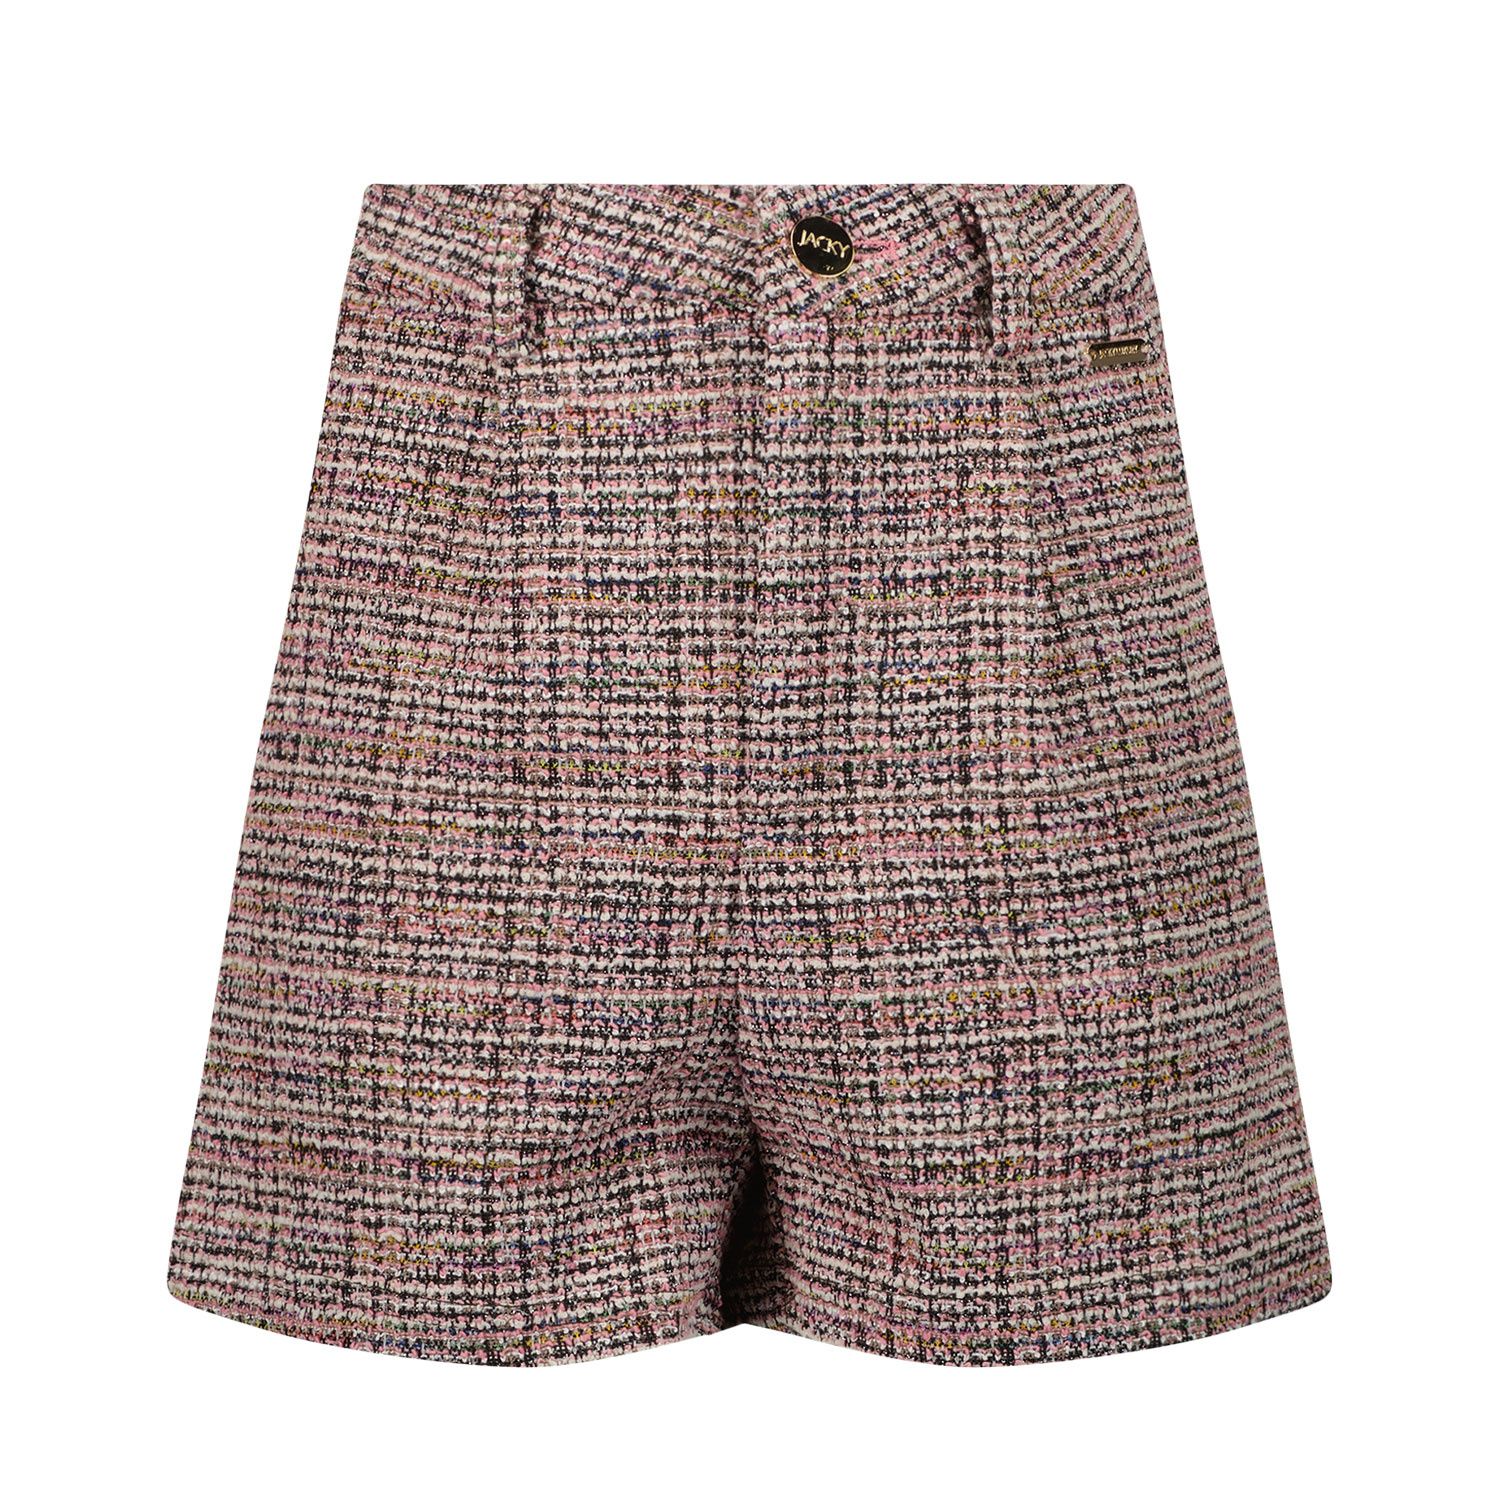 Afbeelding van Jacky Girls JG220315 kinder shorts roze